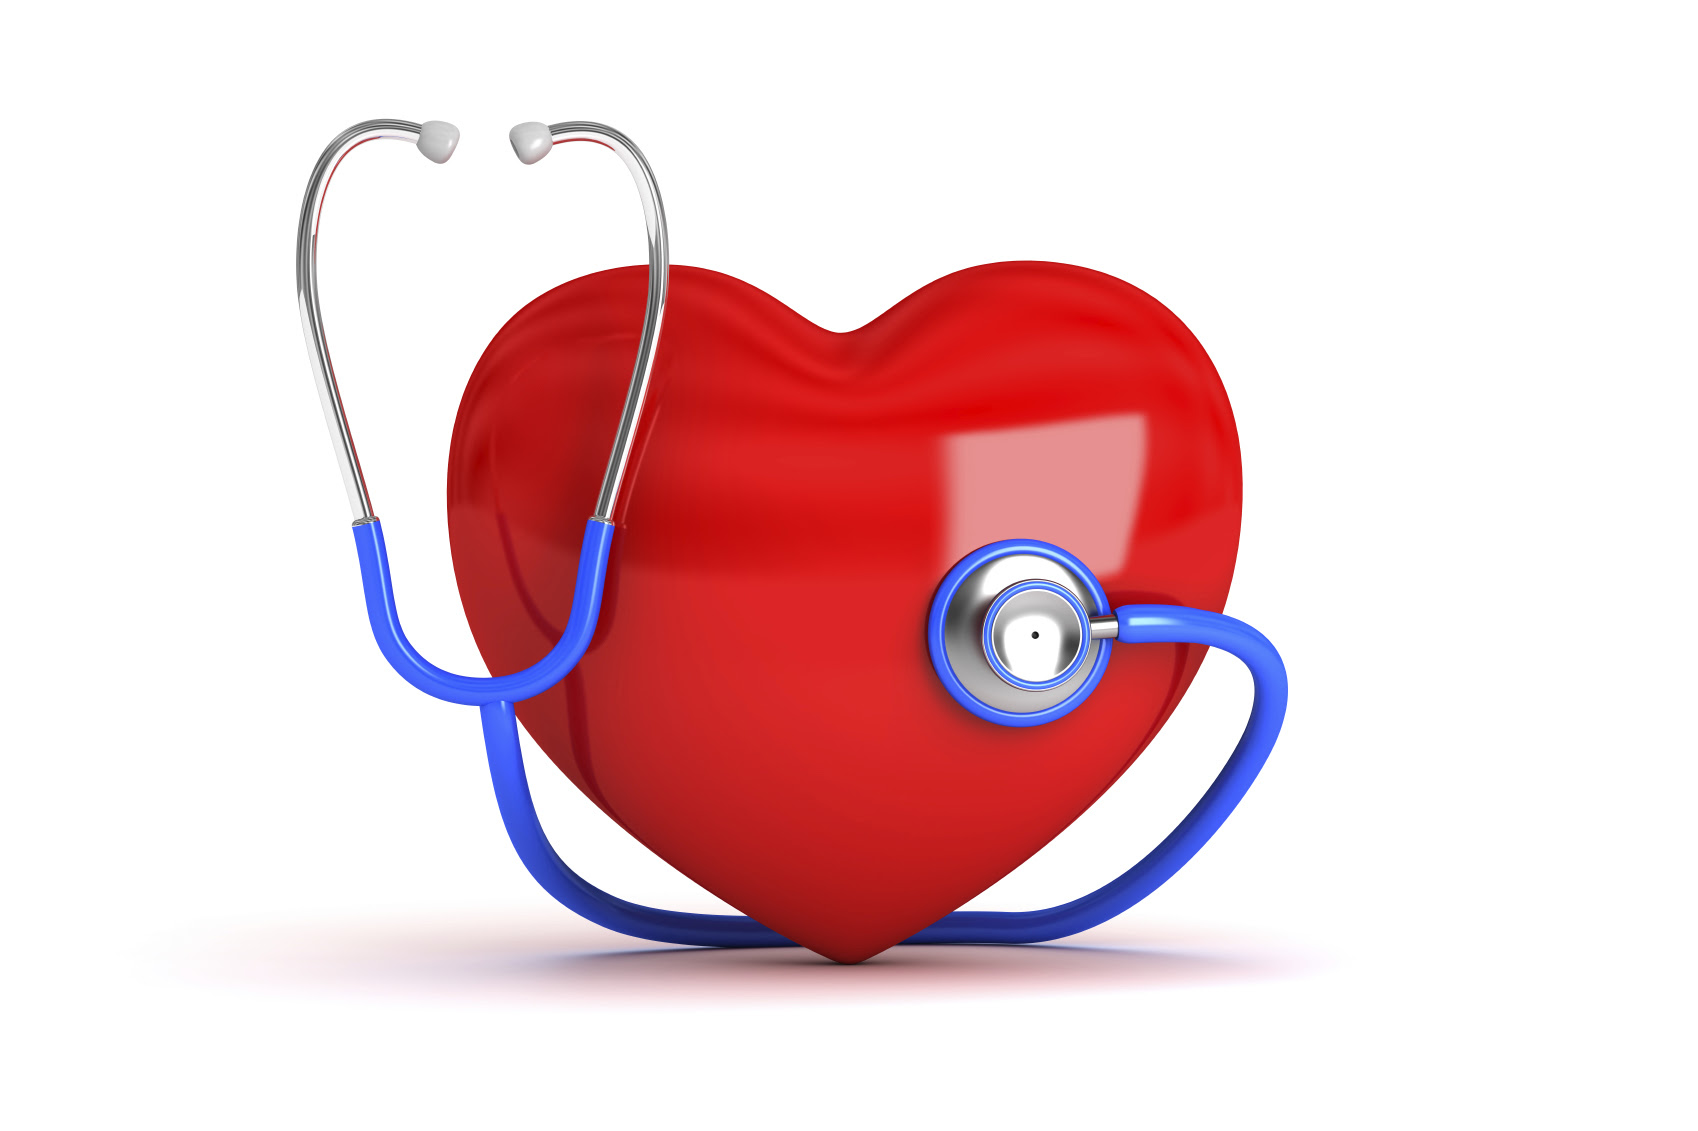 Food Cause Heart Disease | Health and Medicine